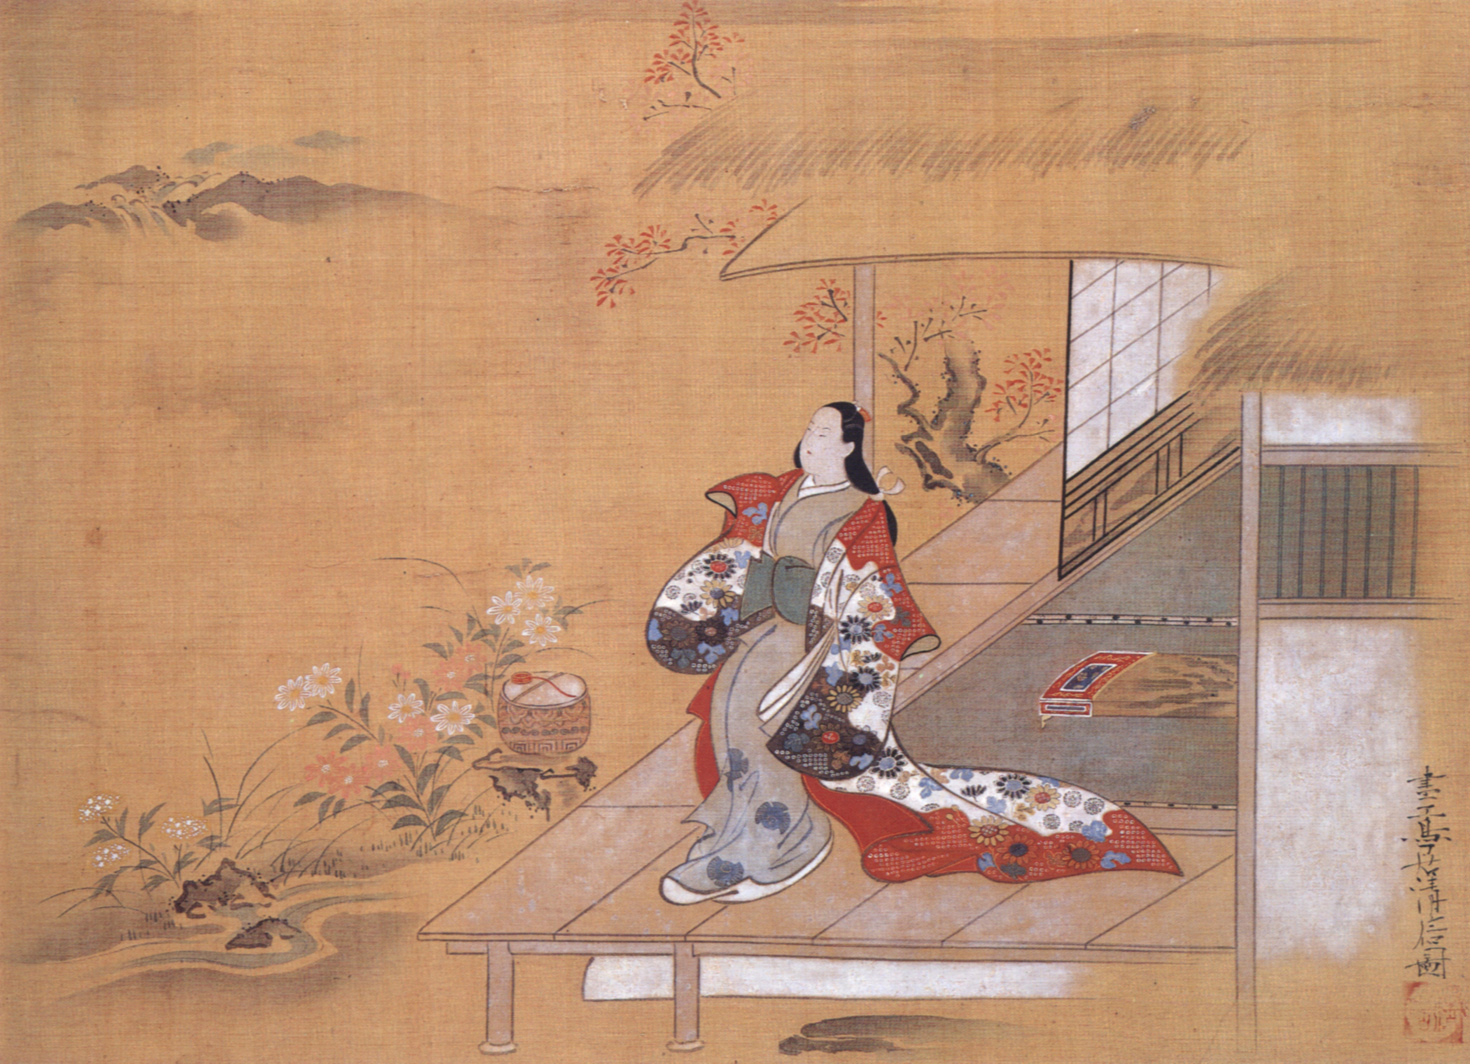 Heian легенды re written. Эпоха Хэйан в Японии. Период Хэйан в Японии. Японская живопись периода Хэйан. Живопись эпохи Хэйан.